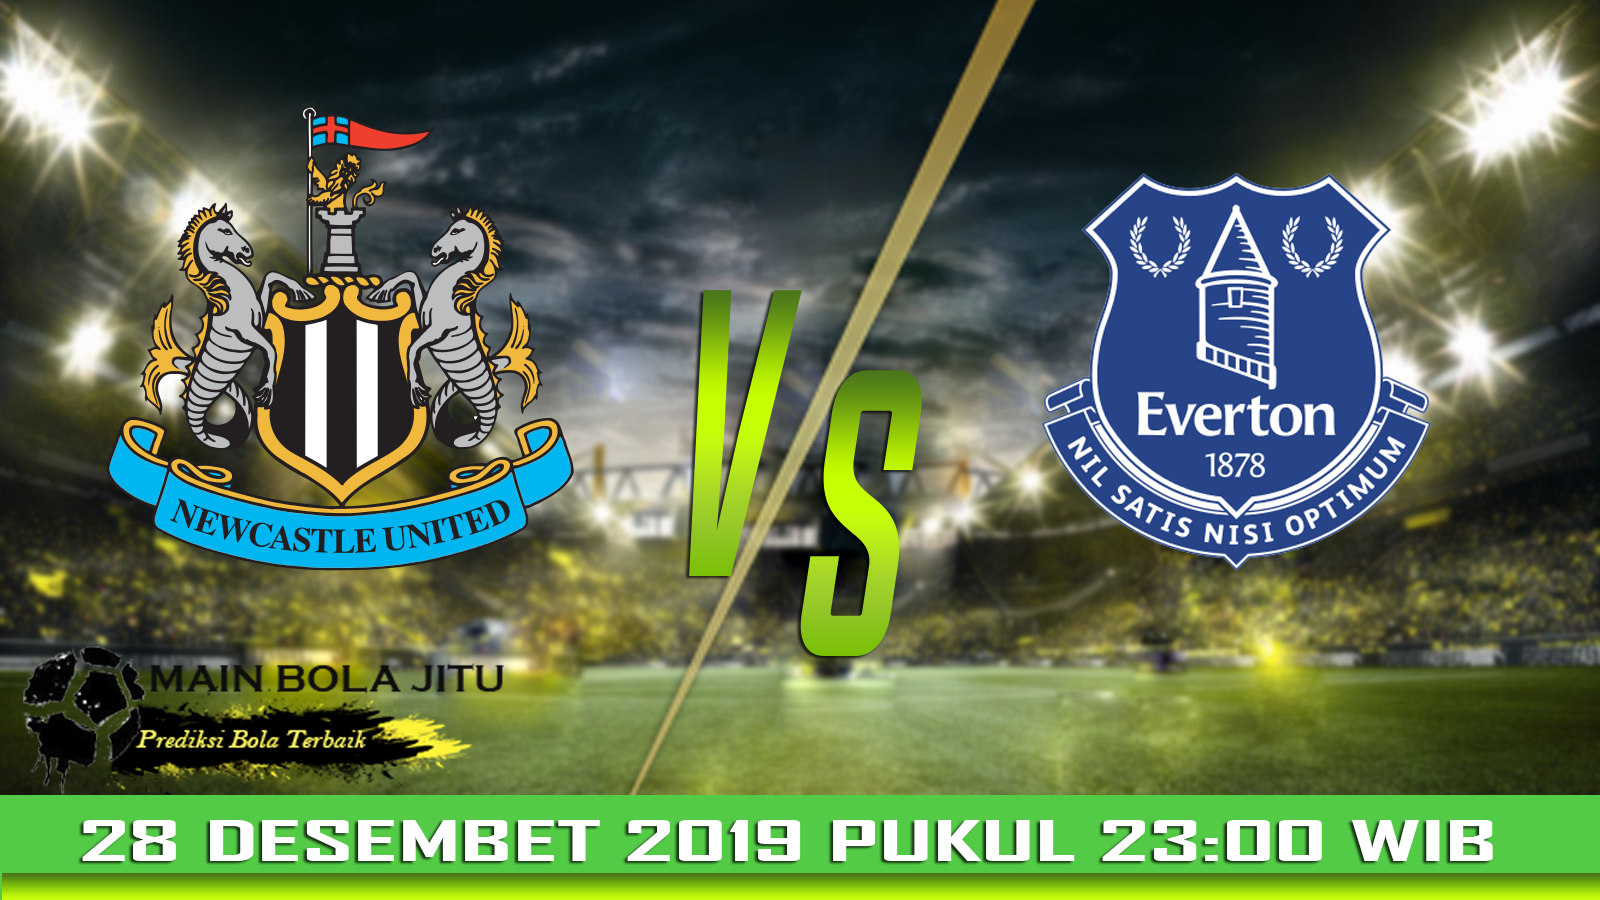 Prediksi Skor Newcastle vs Everton tanggal 28-12-2019